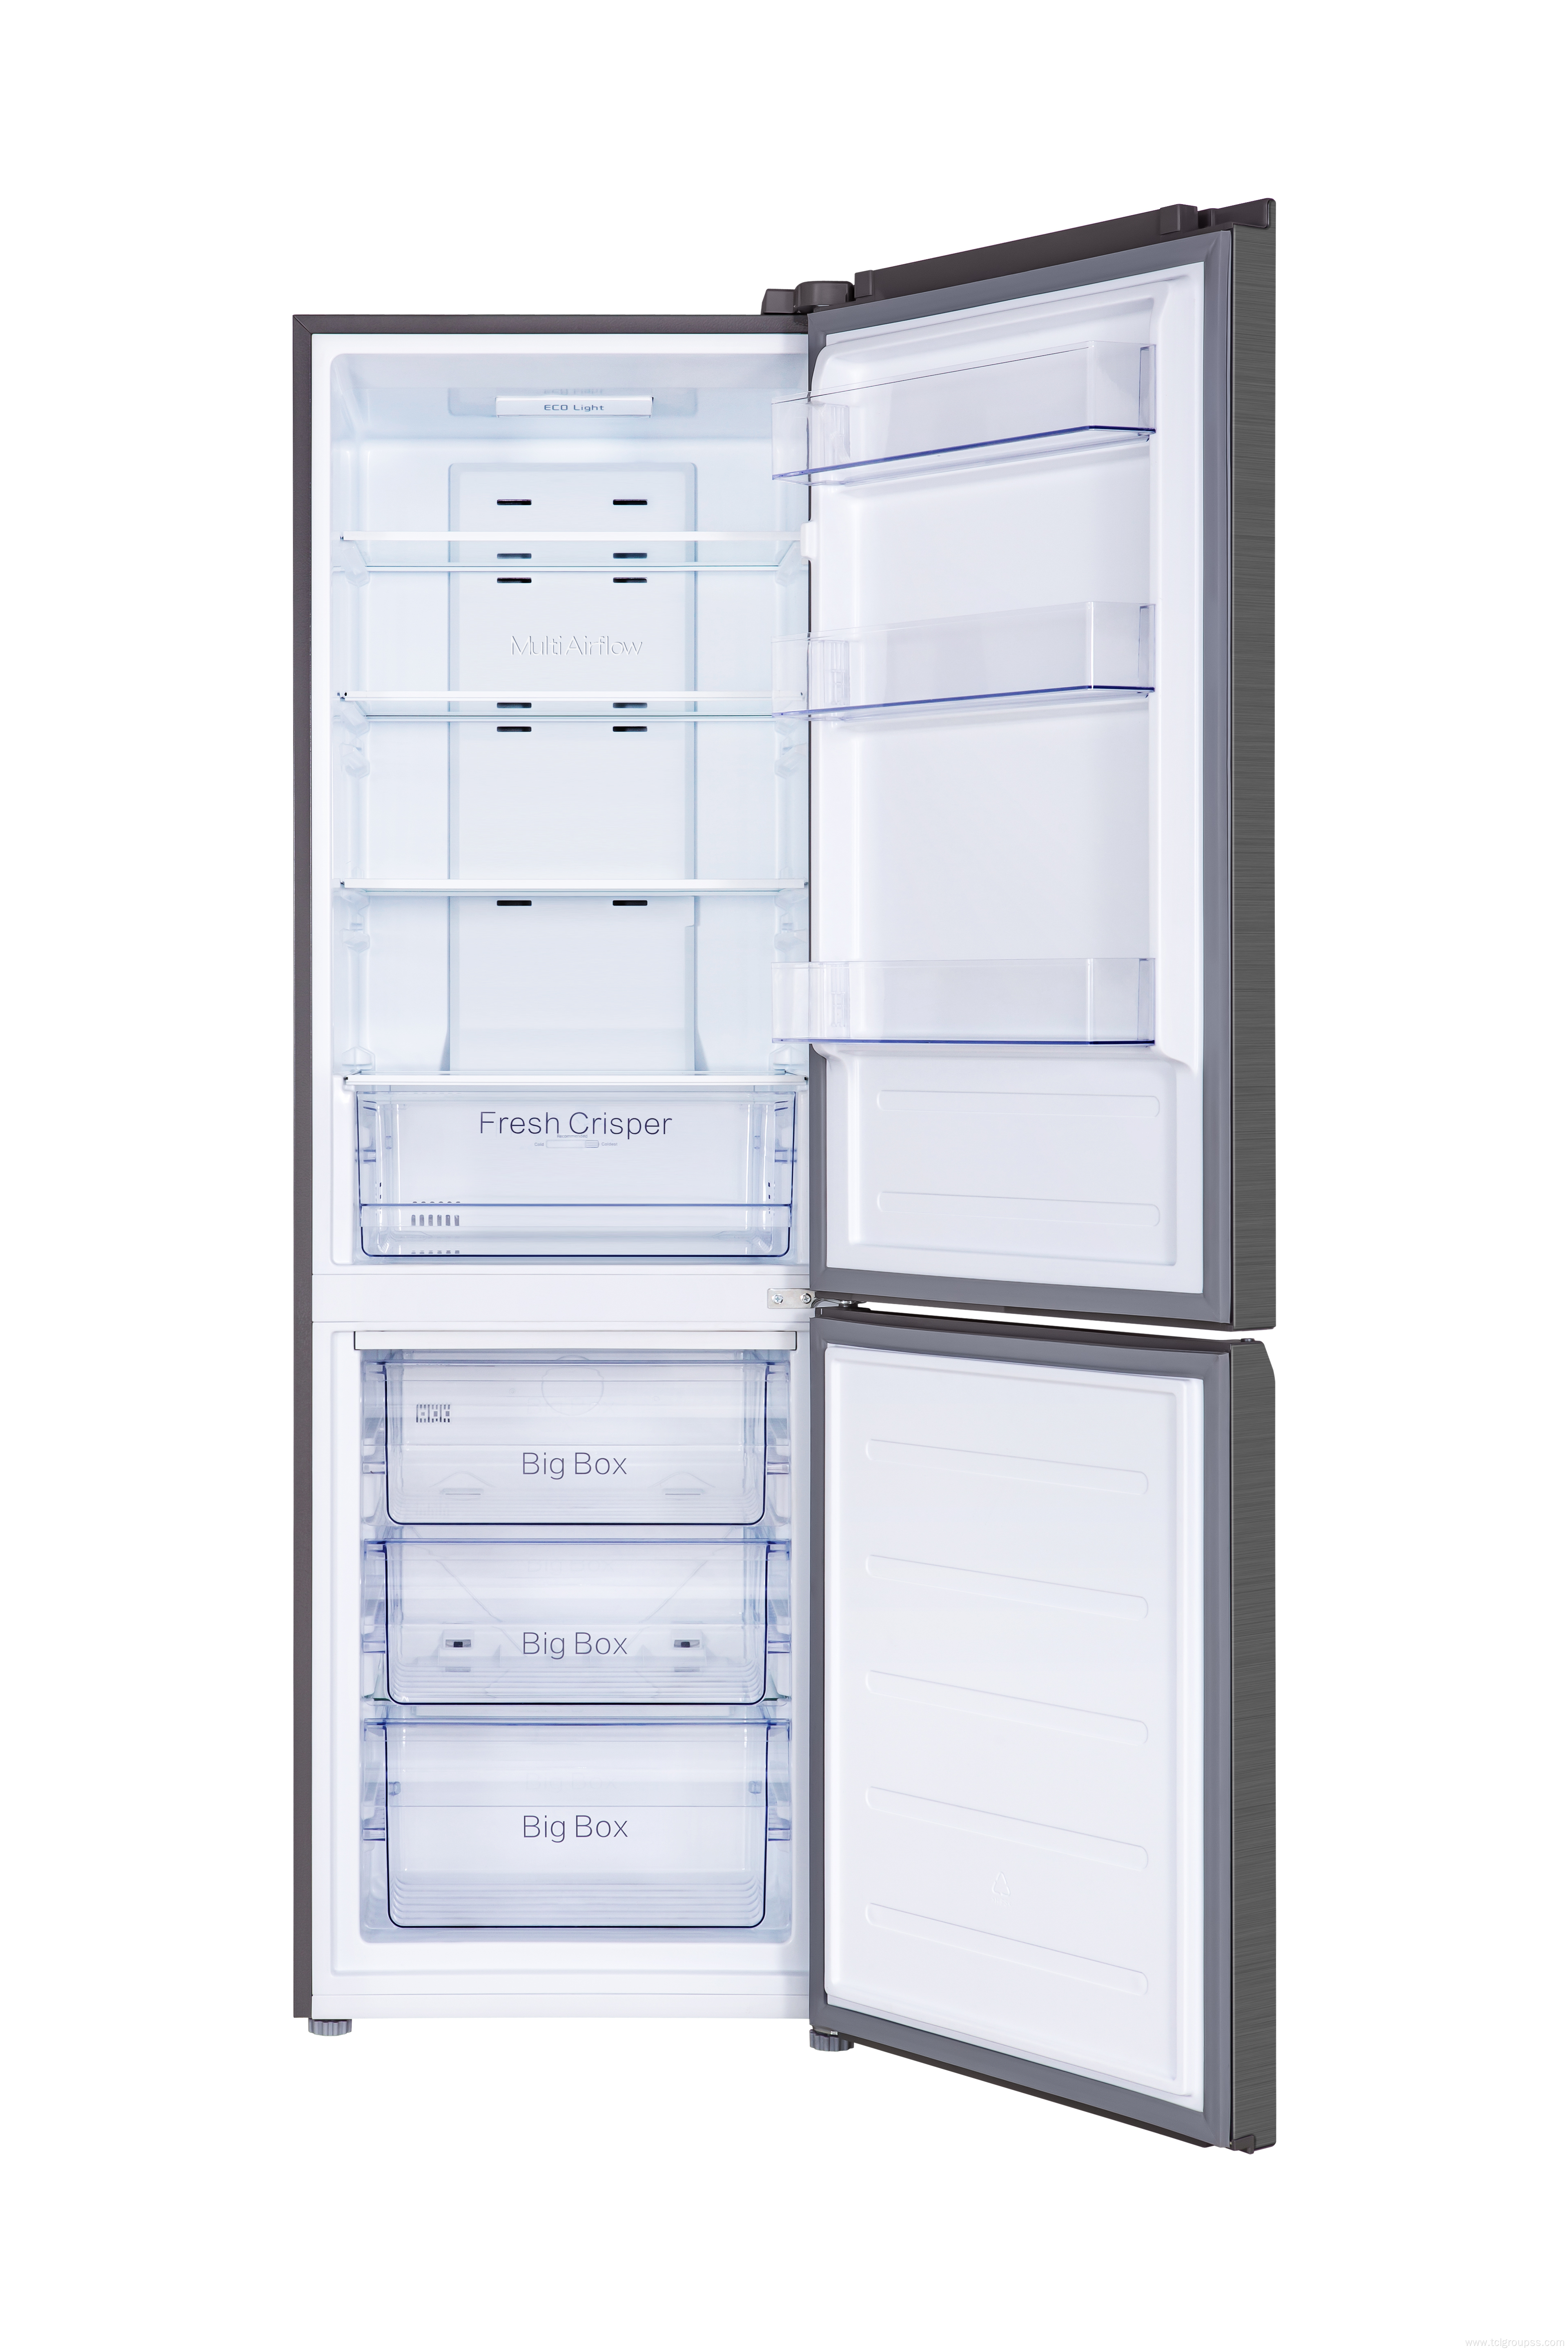 TCL Refrigerator P315BFS